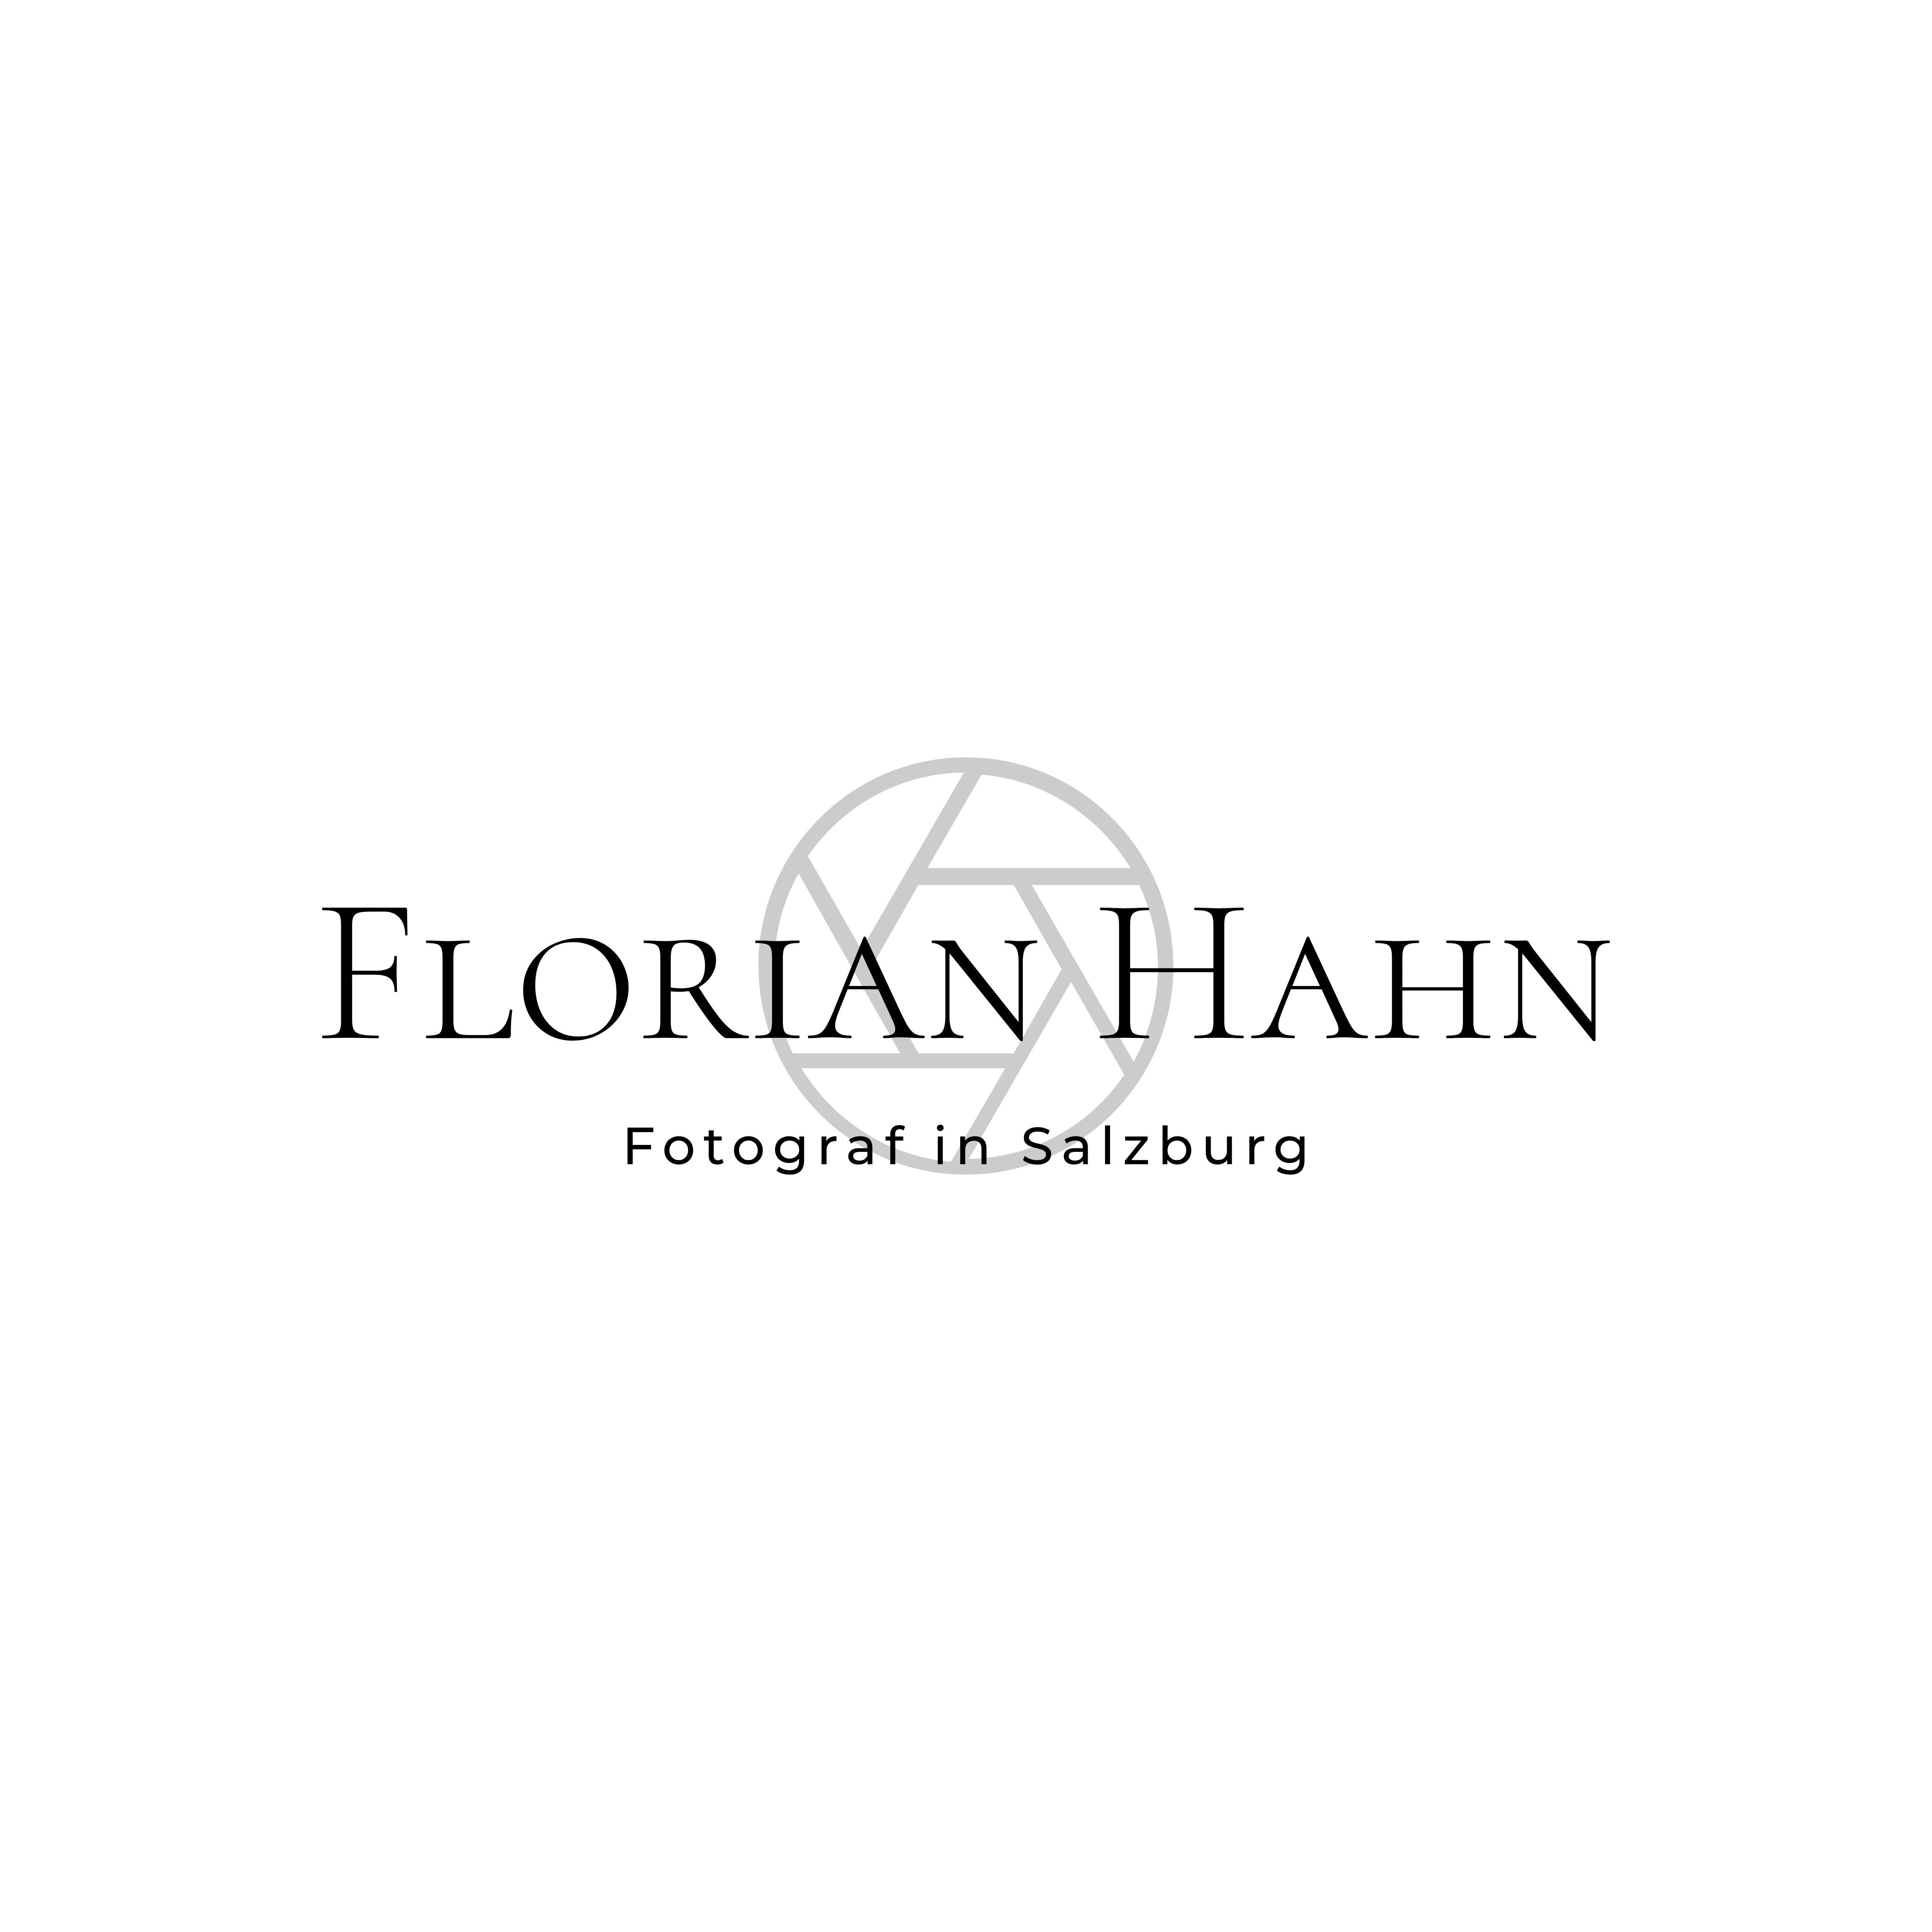 Florian Hahn I Fotograf in Salzburg Logo